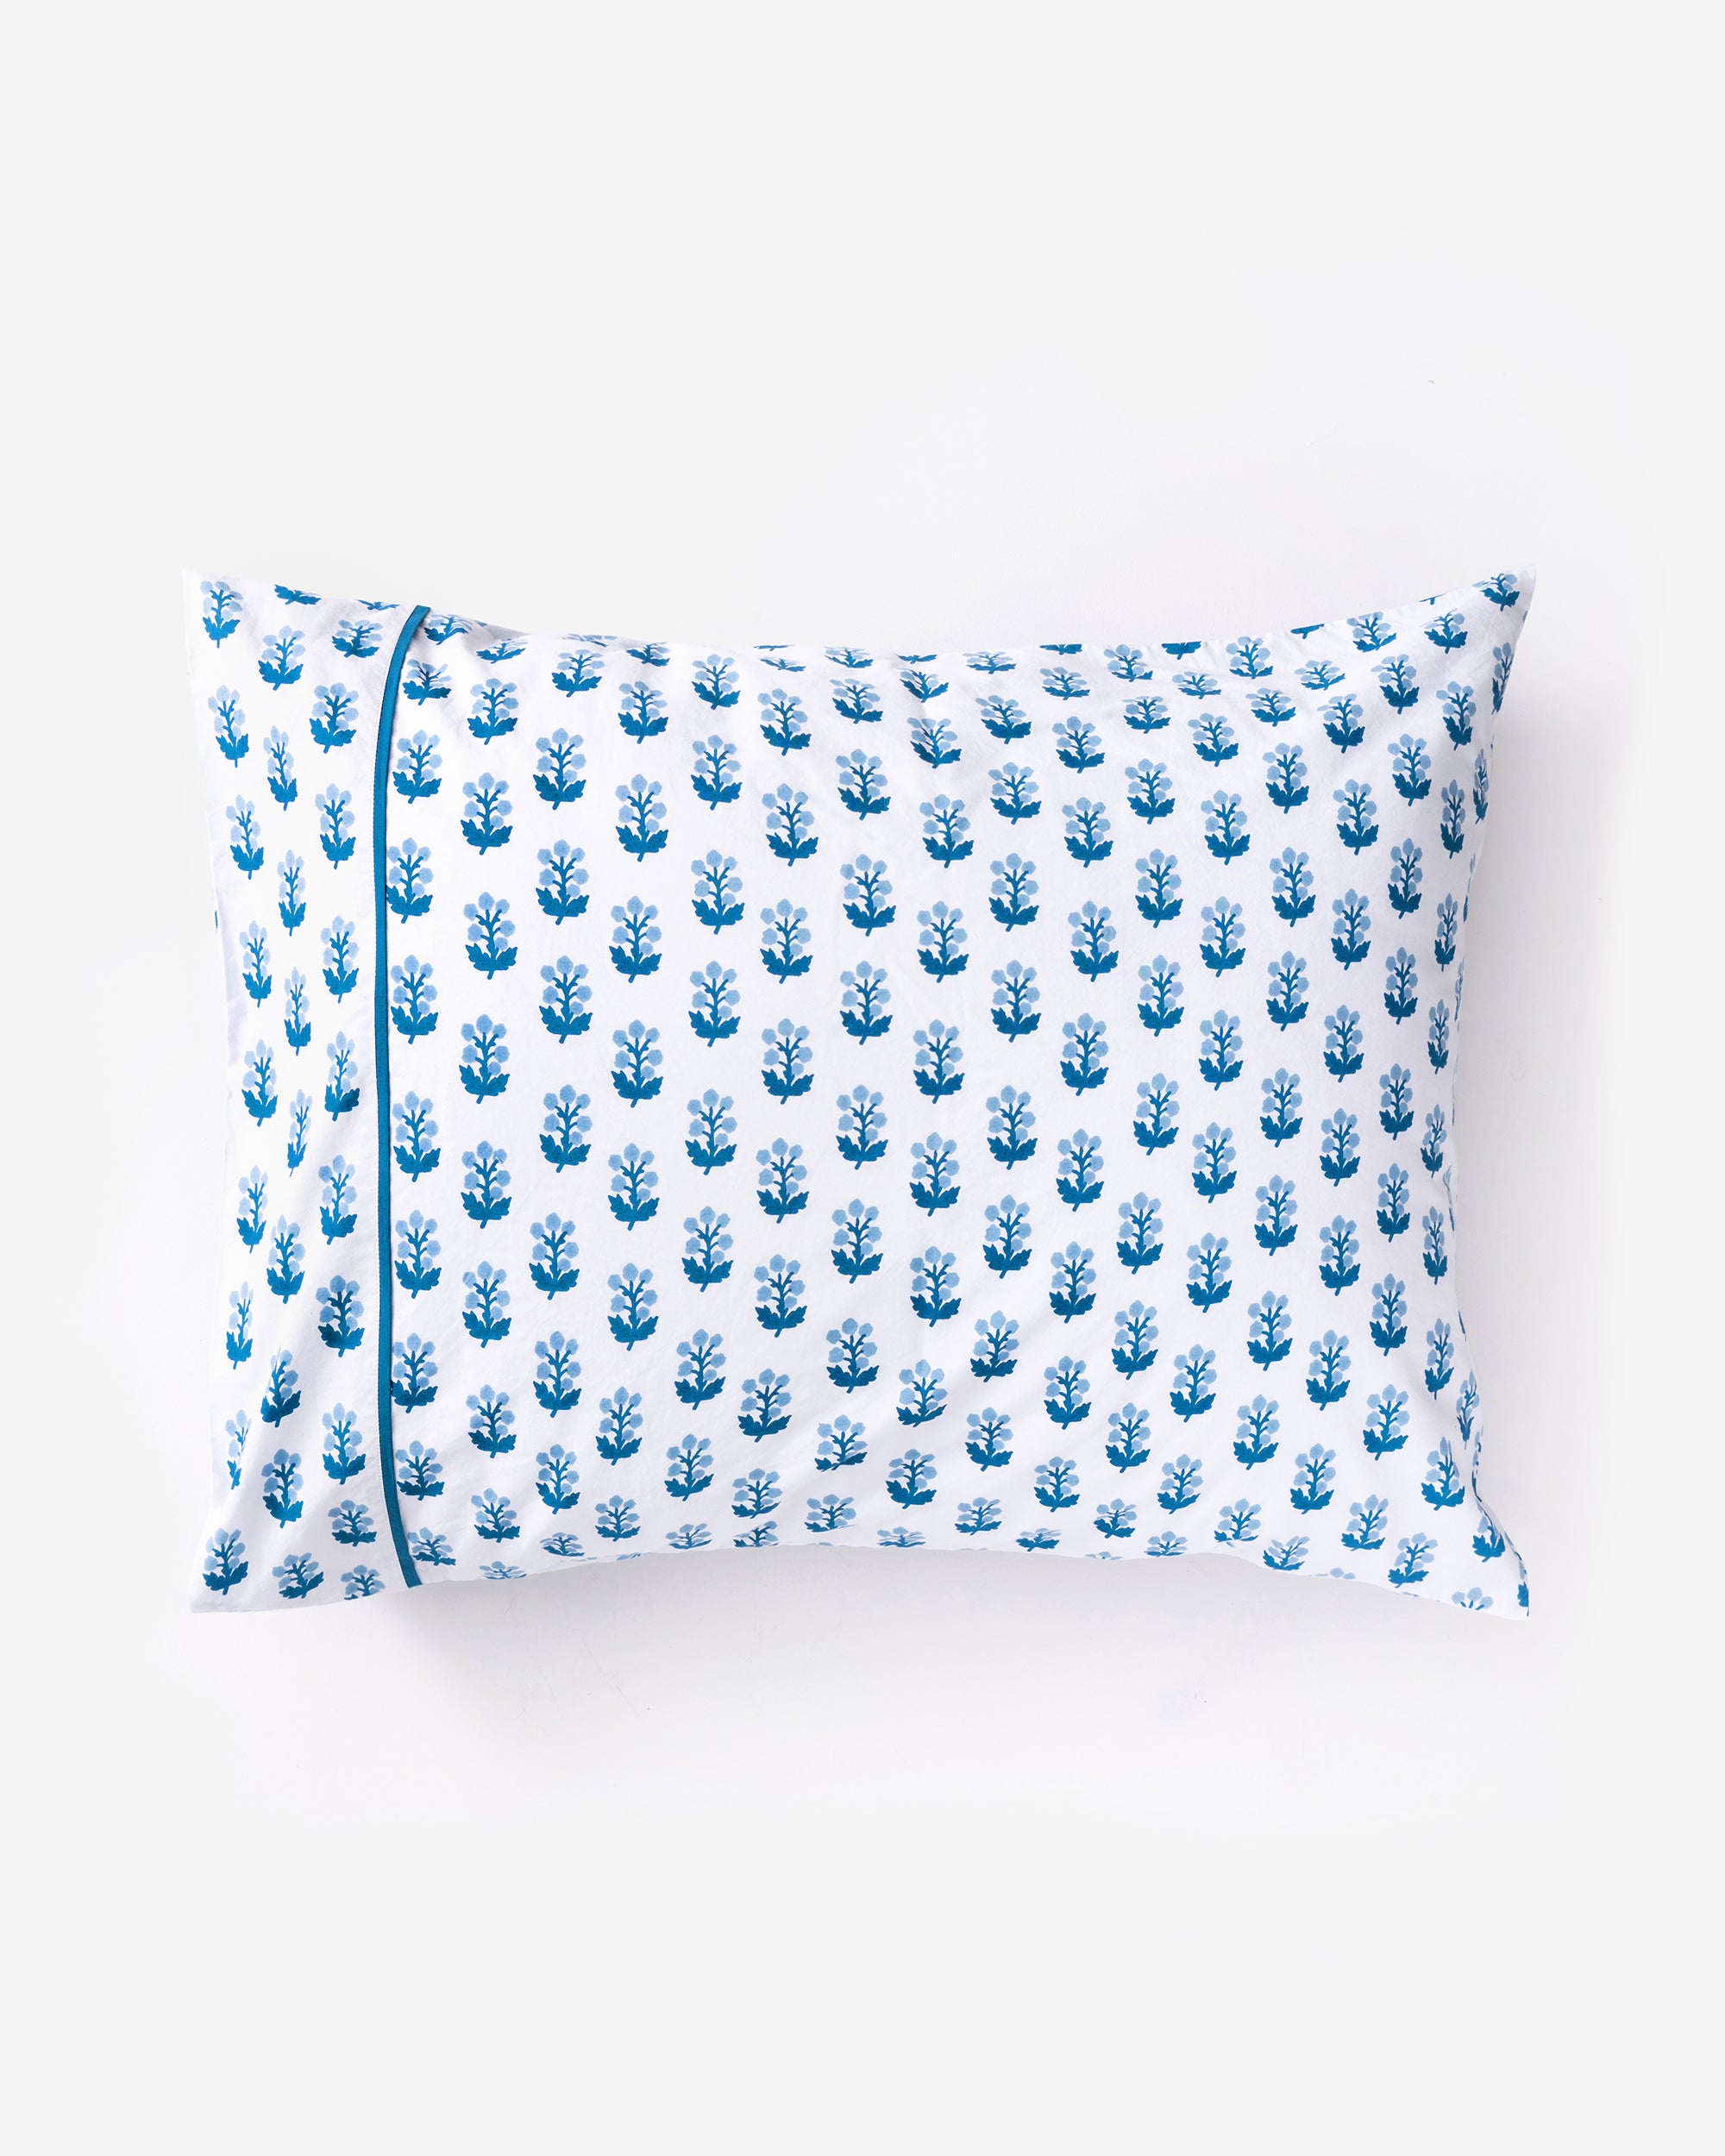 In Bloom - Pillowcase Set - Pale Blue - Printfresh